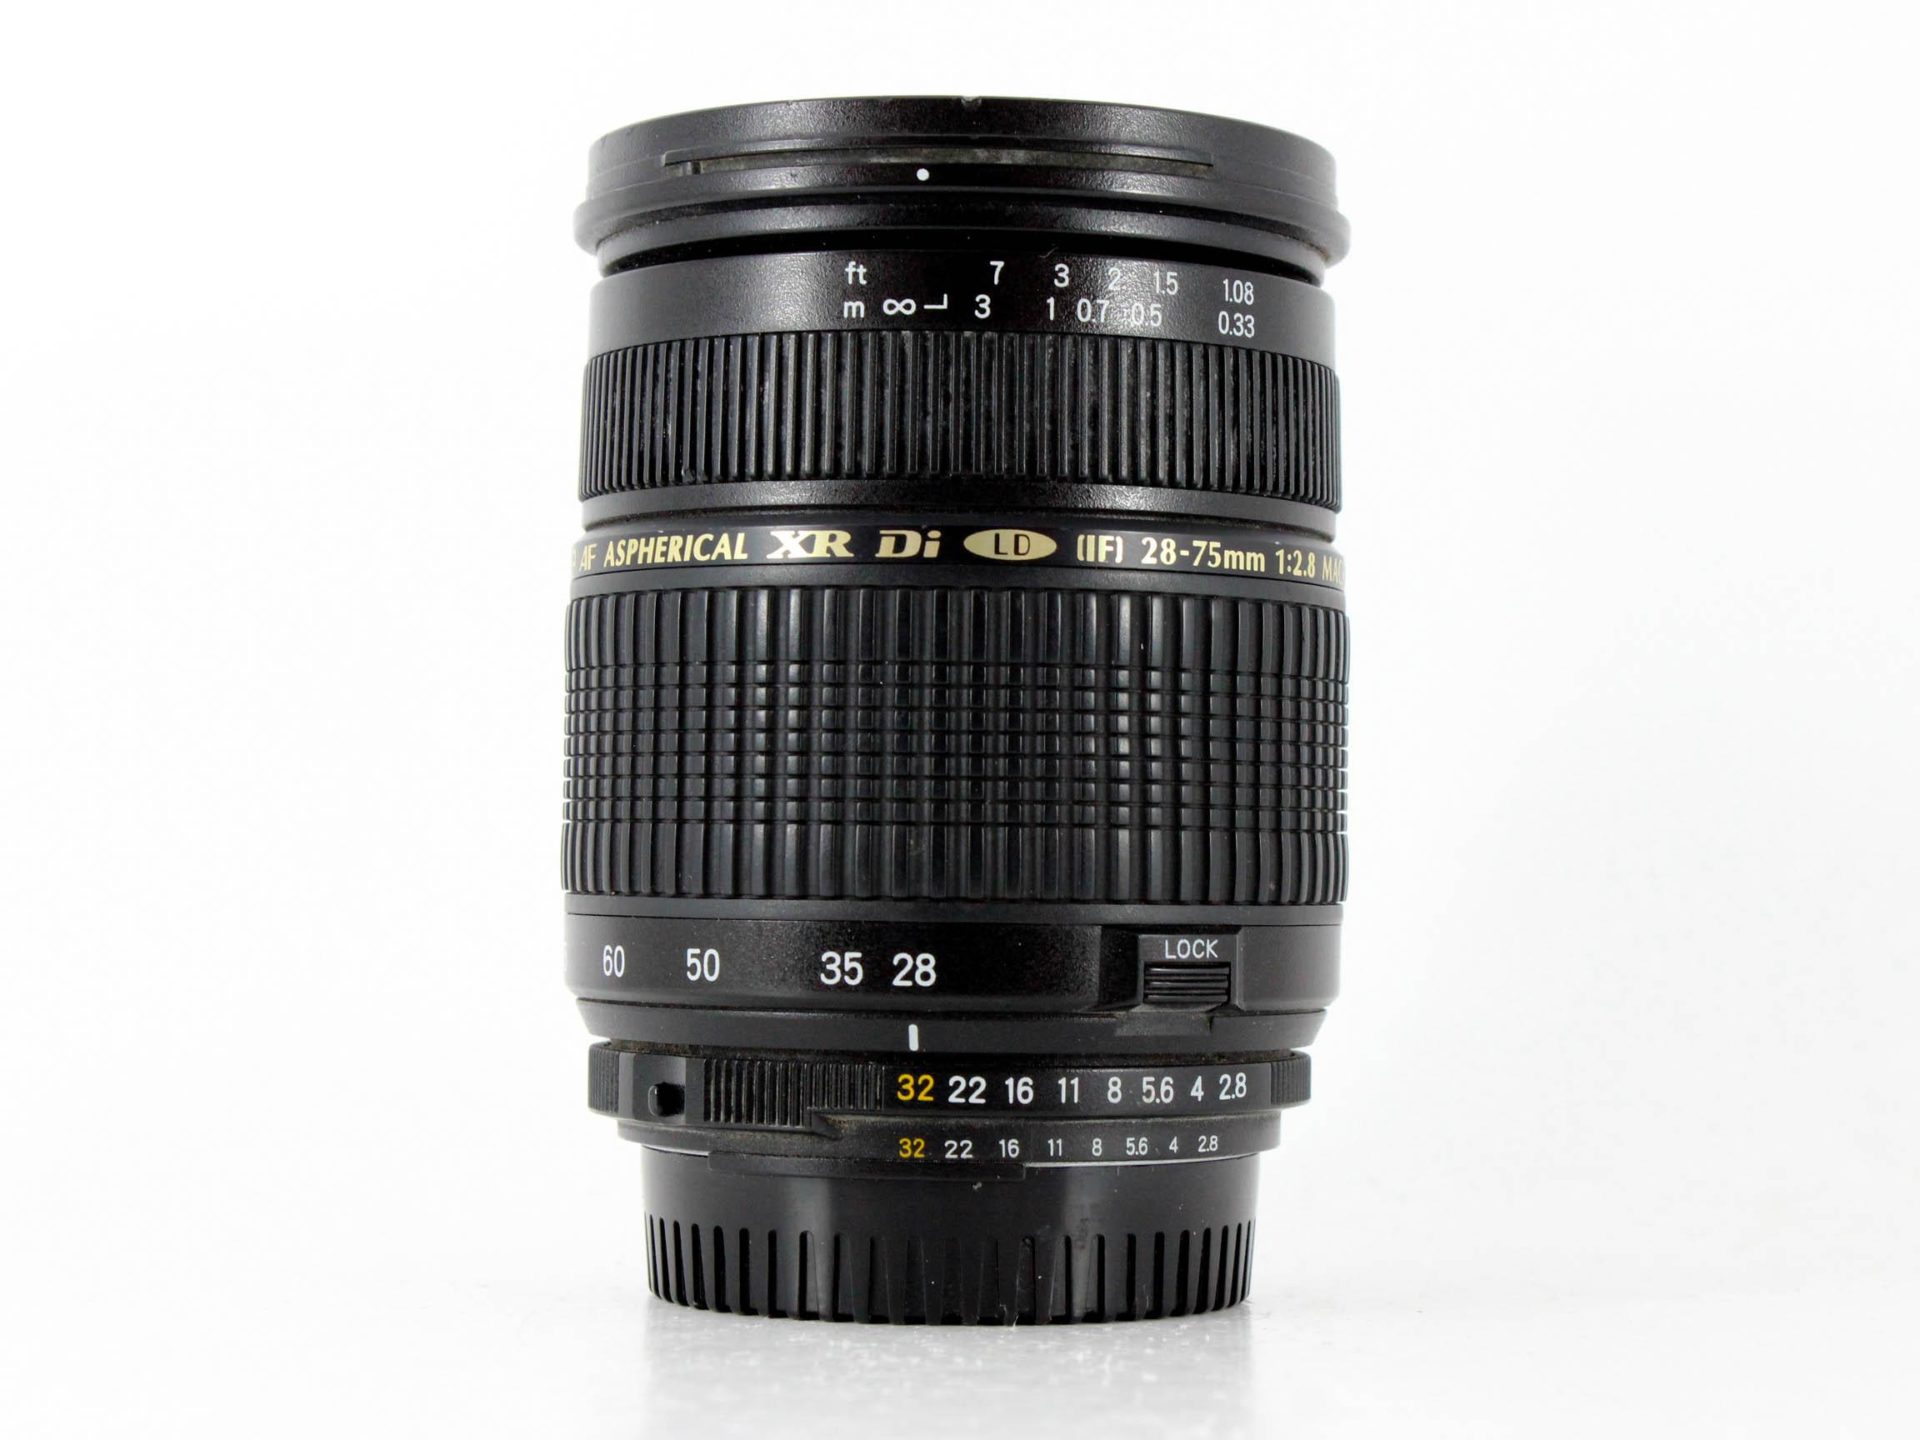 Tamron SP AF 28-75mm f/2.8 XR Di LD Aspherical IF Macro Nikon Fit Lens